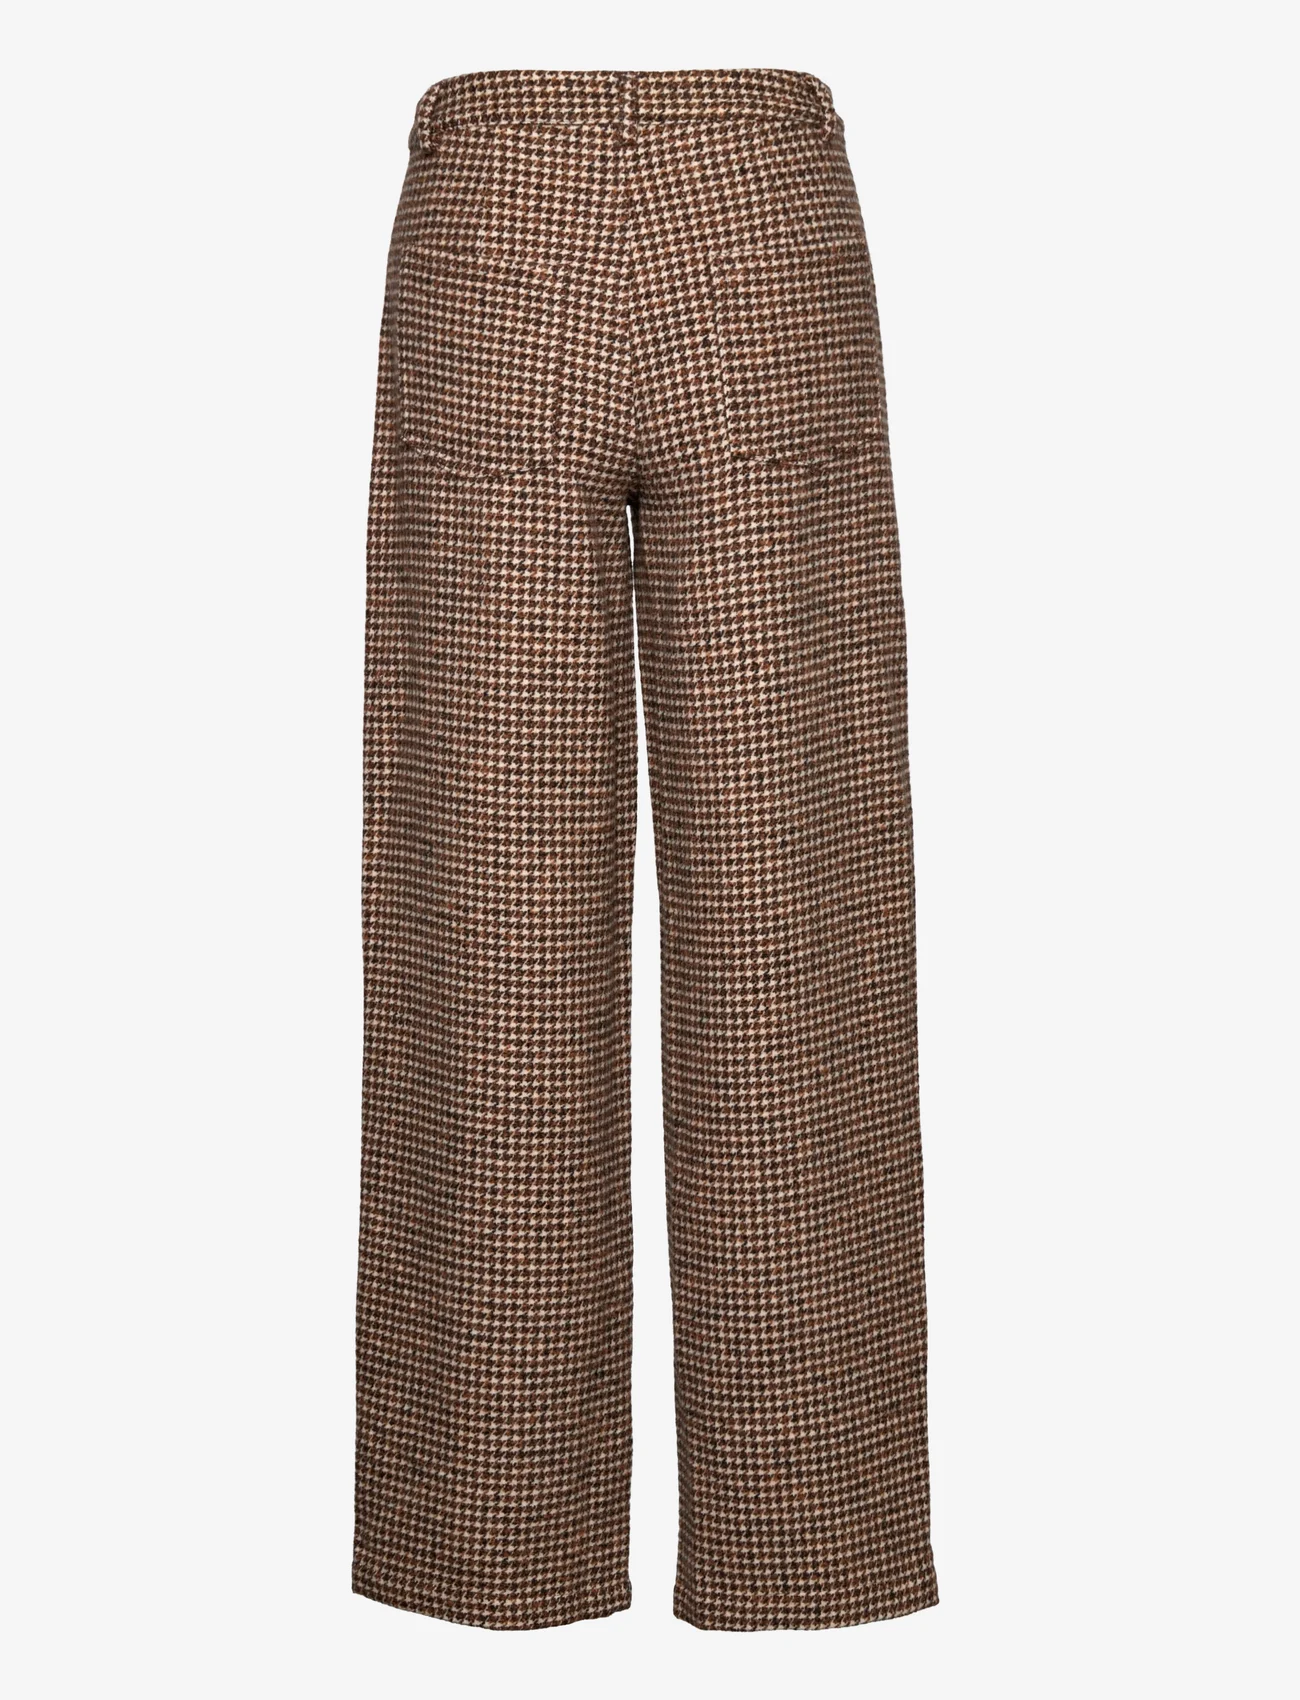 Résumé - OnillaRS Pant - bukser med brede ben - brown - 1